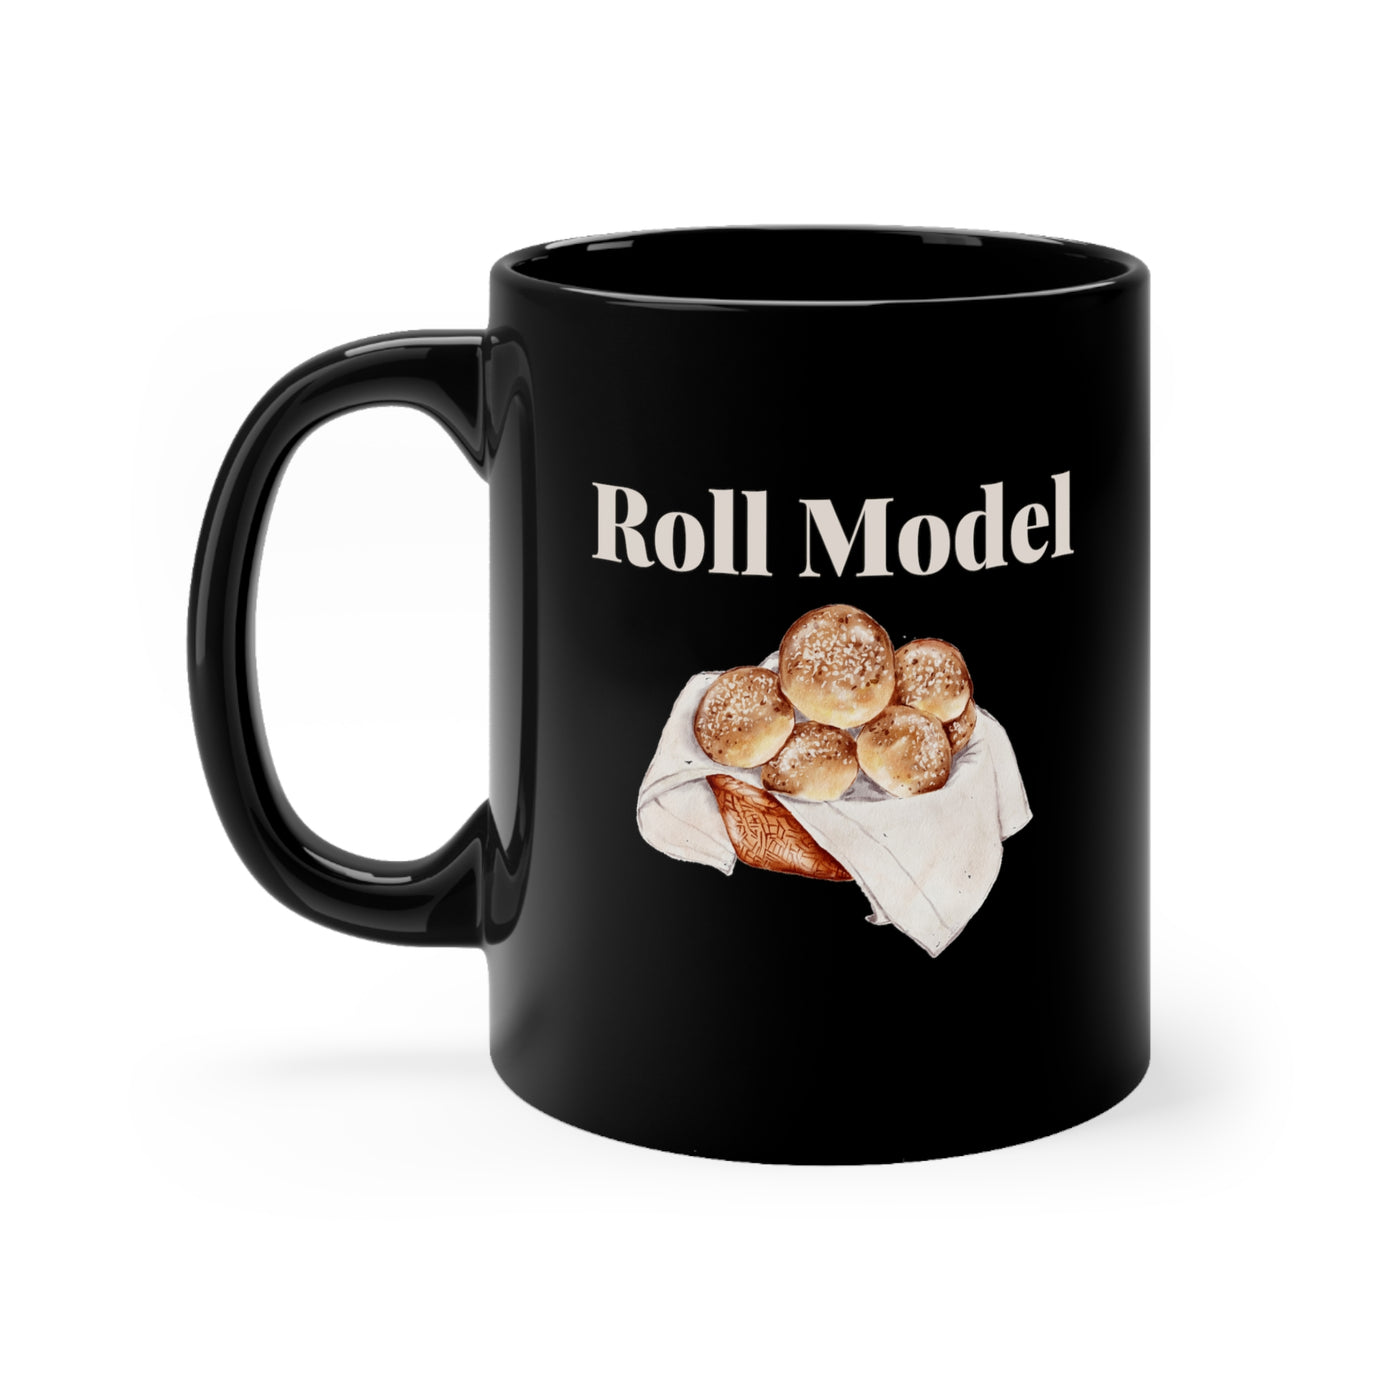 Roll Model 11oz Ceramic Mug